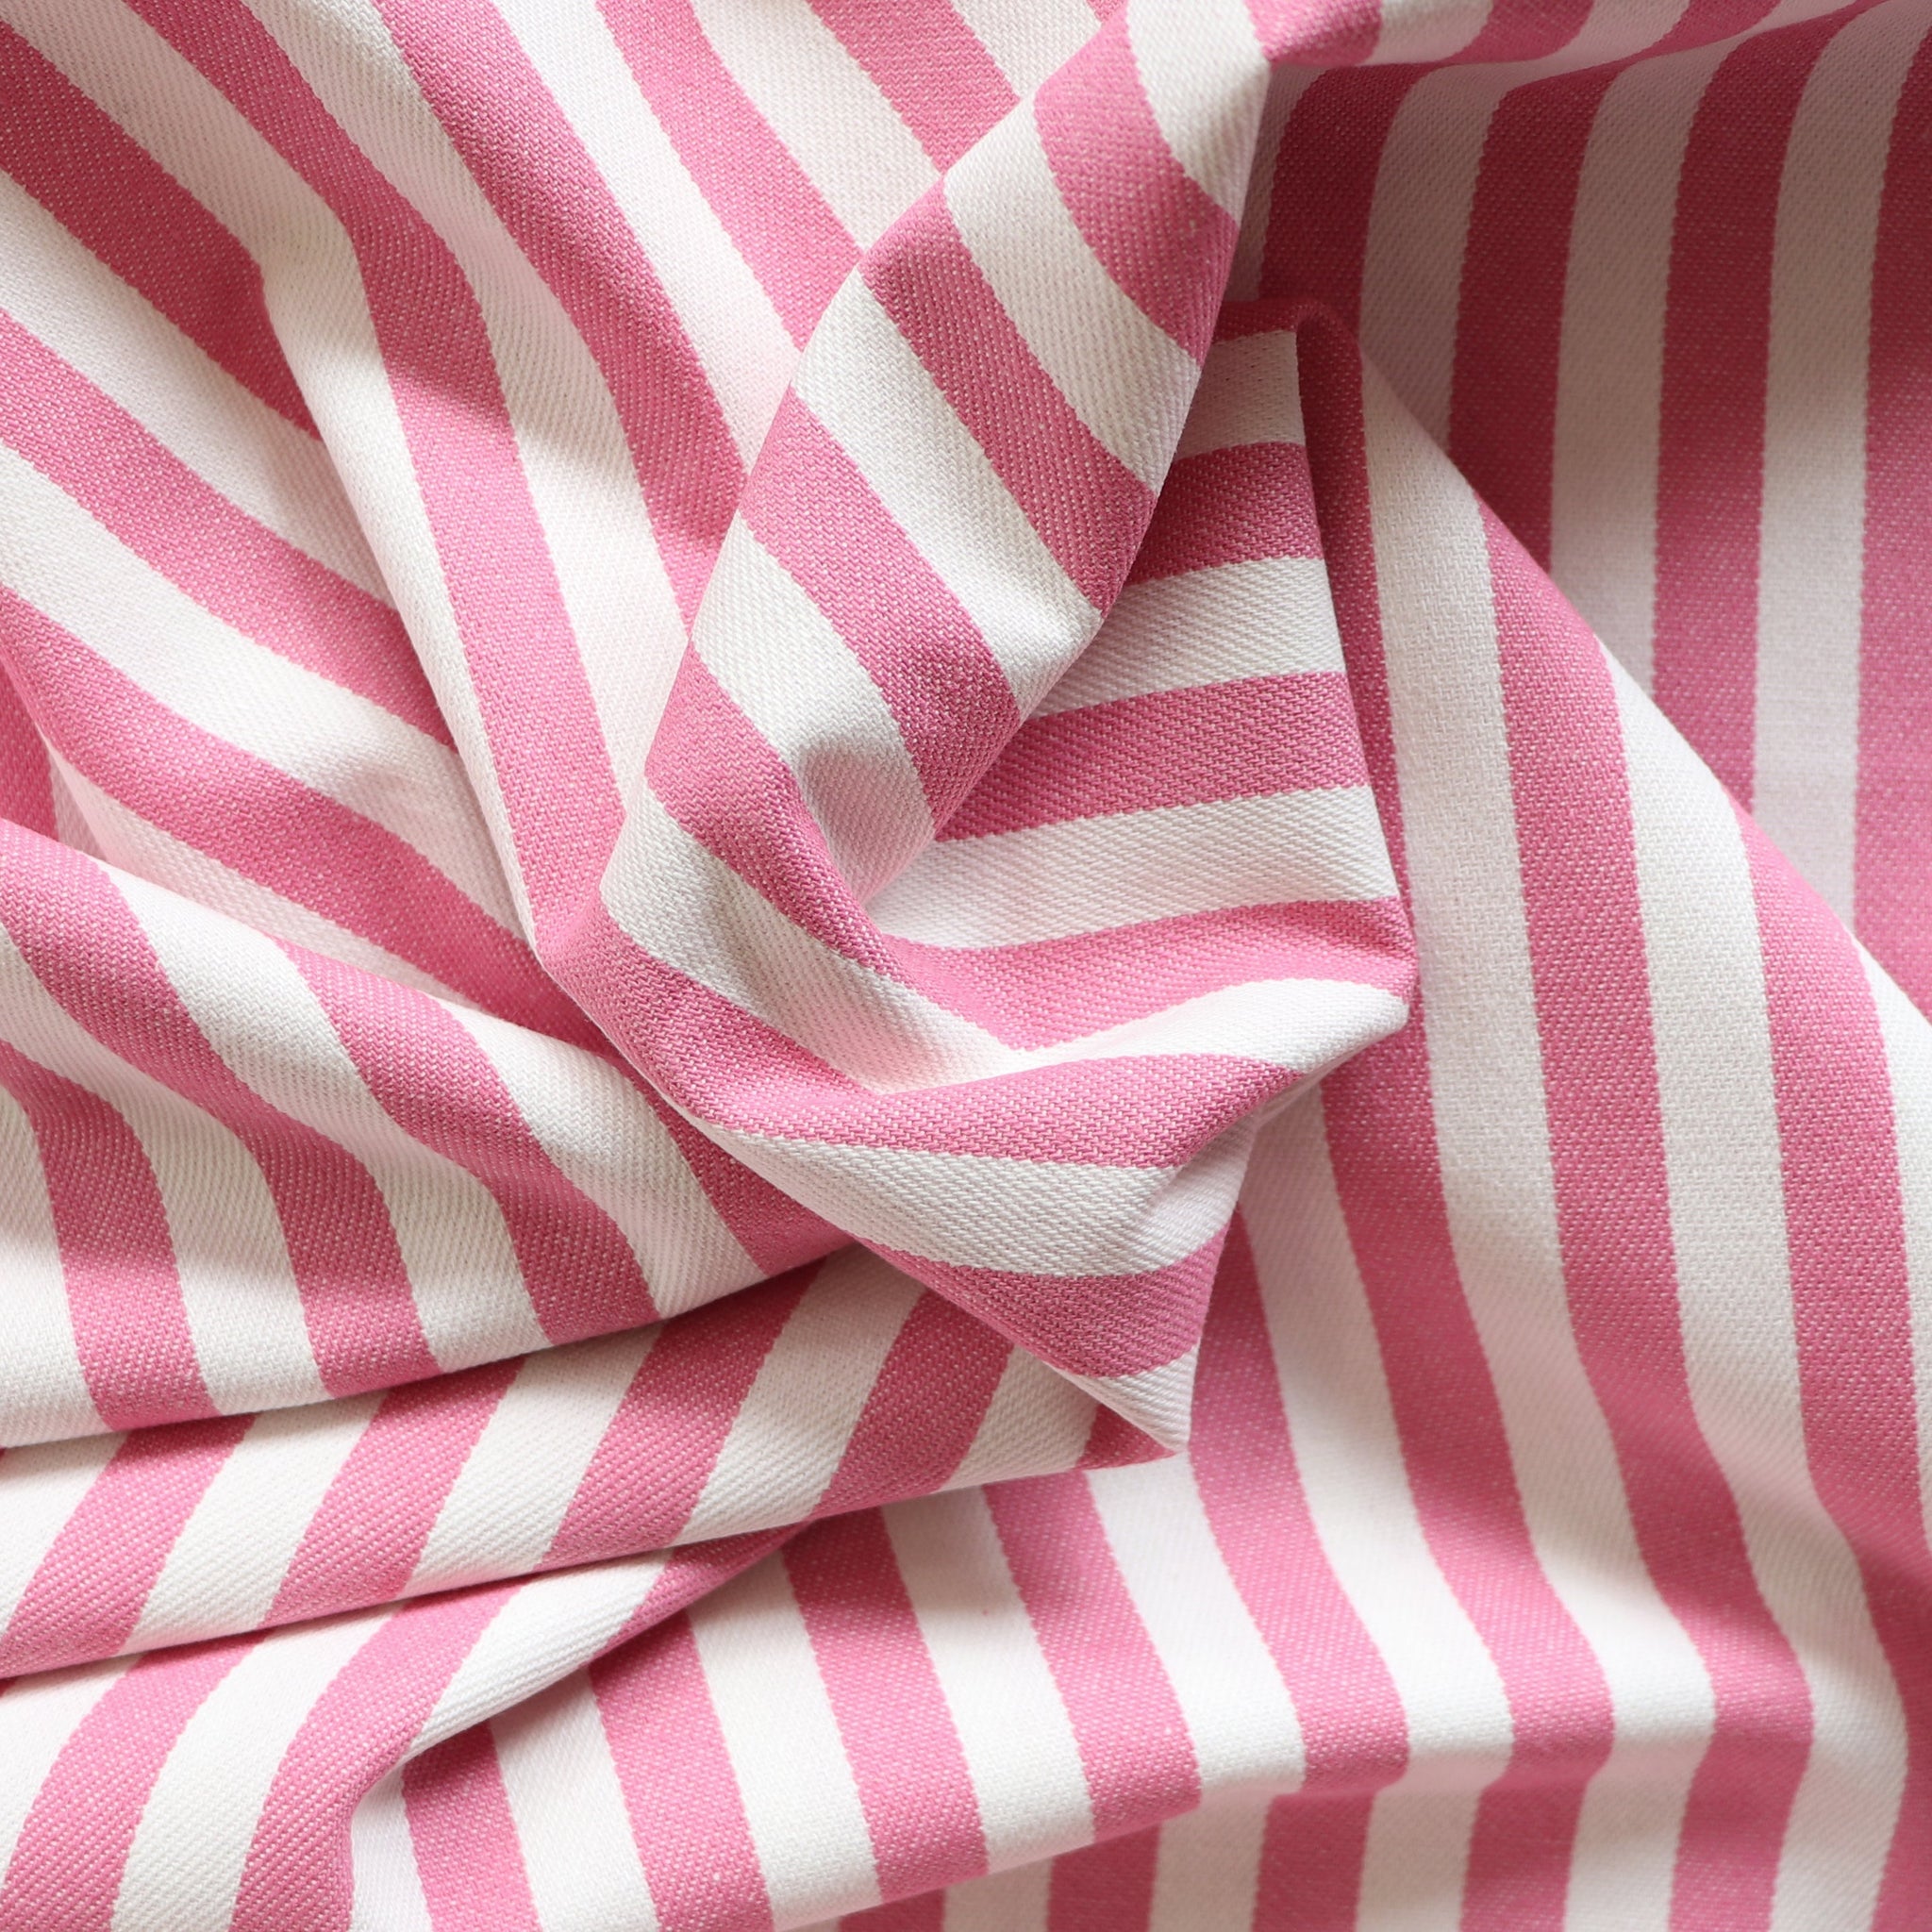 Dressmaking Cotton Denim Hickory Stripe - Pink and White